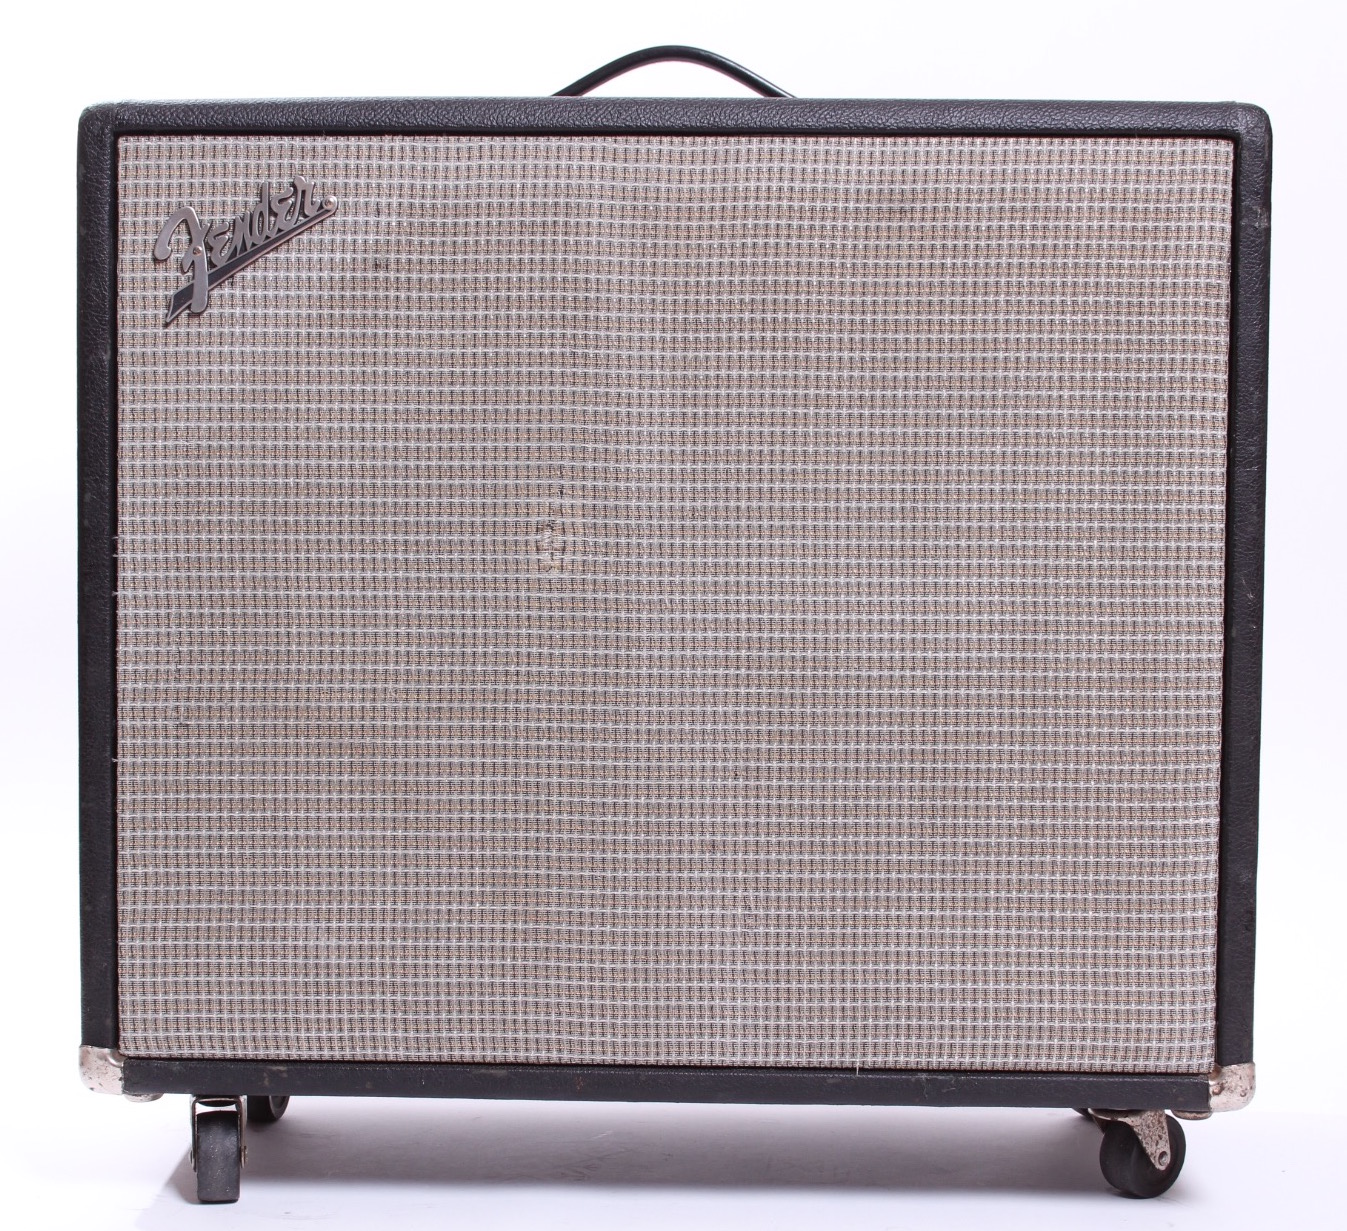 Fender Super Reverb 2x12 Cabinet 1970 Silverface Amp For Sale